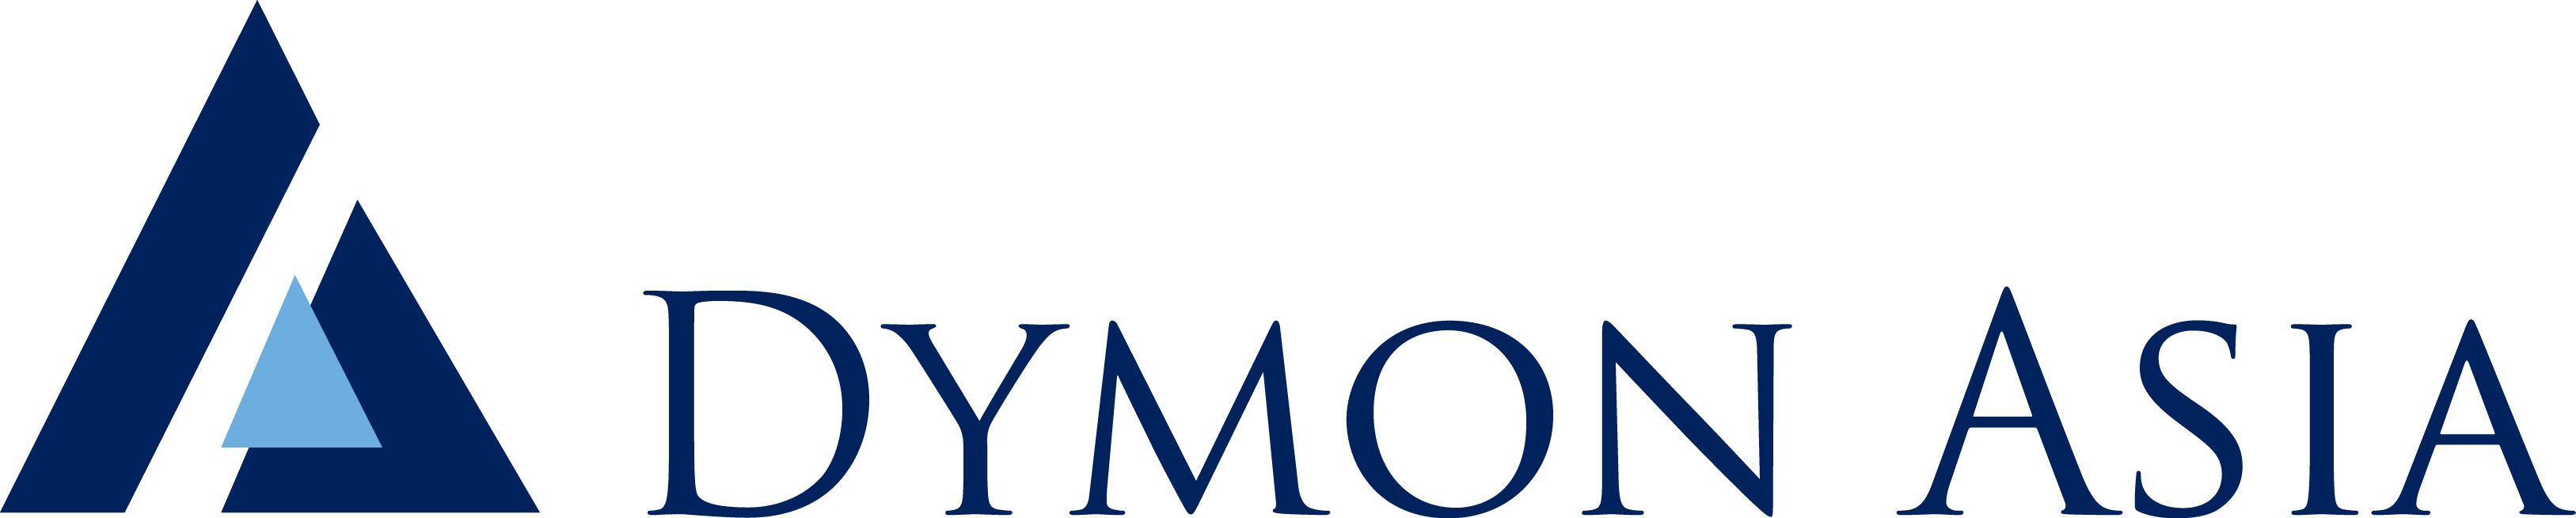 Dymon Asia Capital (singapore) Pte. Ltd. logo